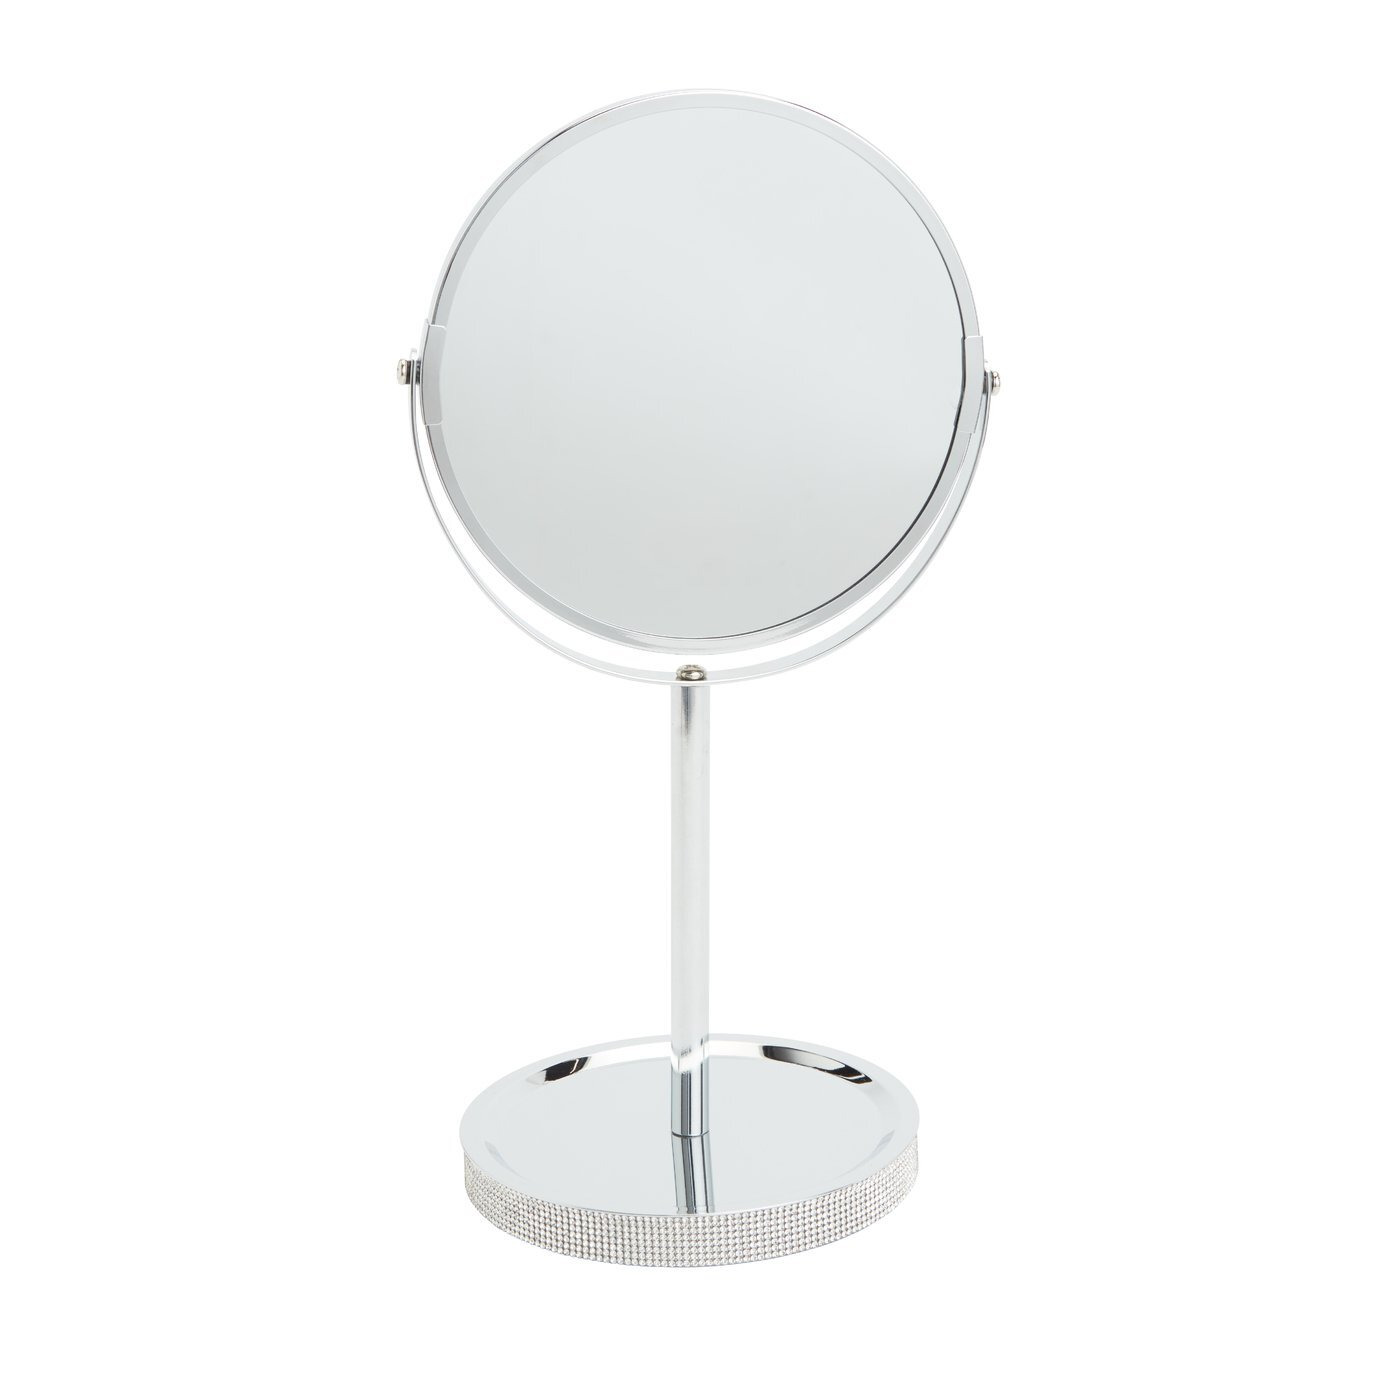 Argos Home Sparkle Pedestal Mirror - Silver - image 1